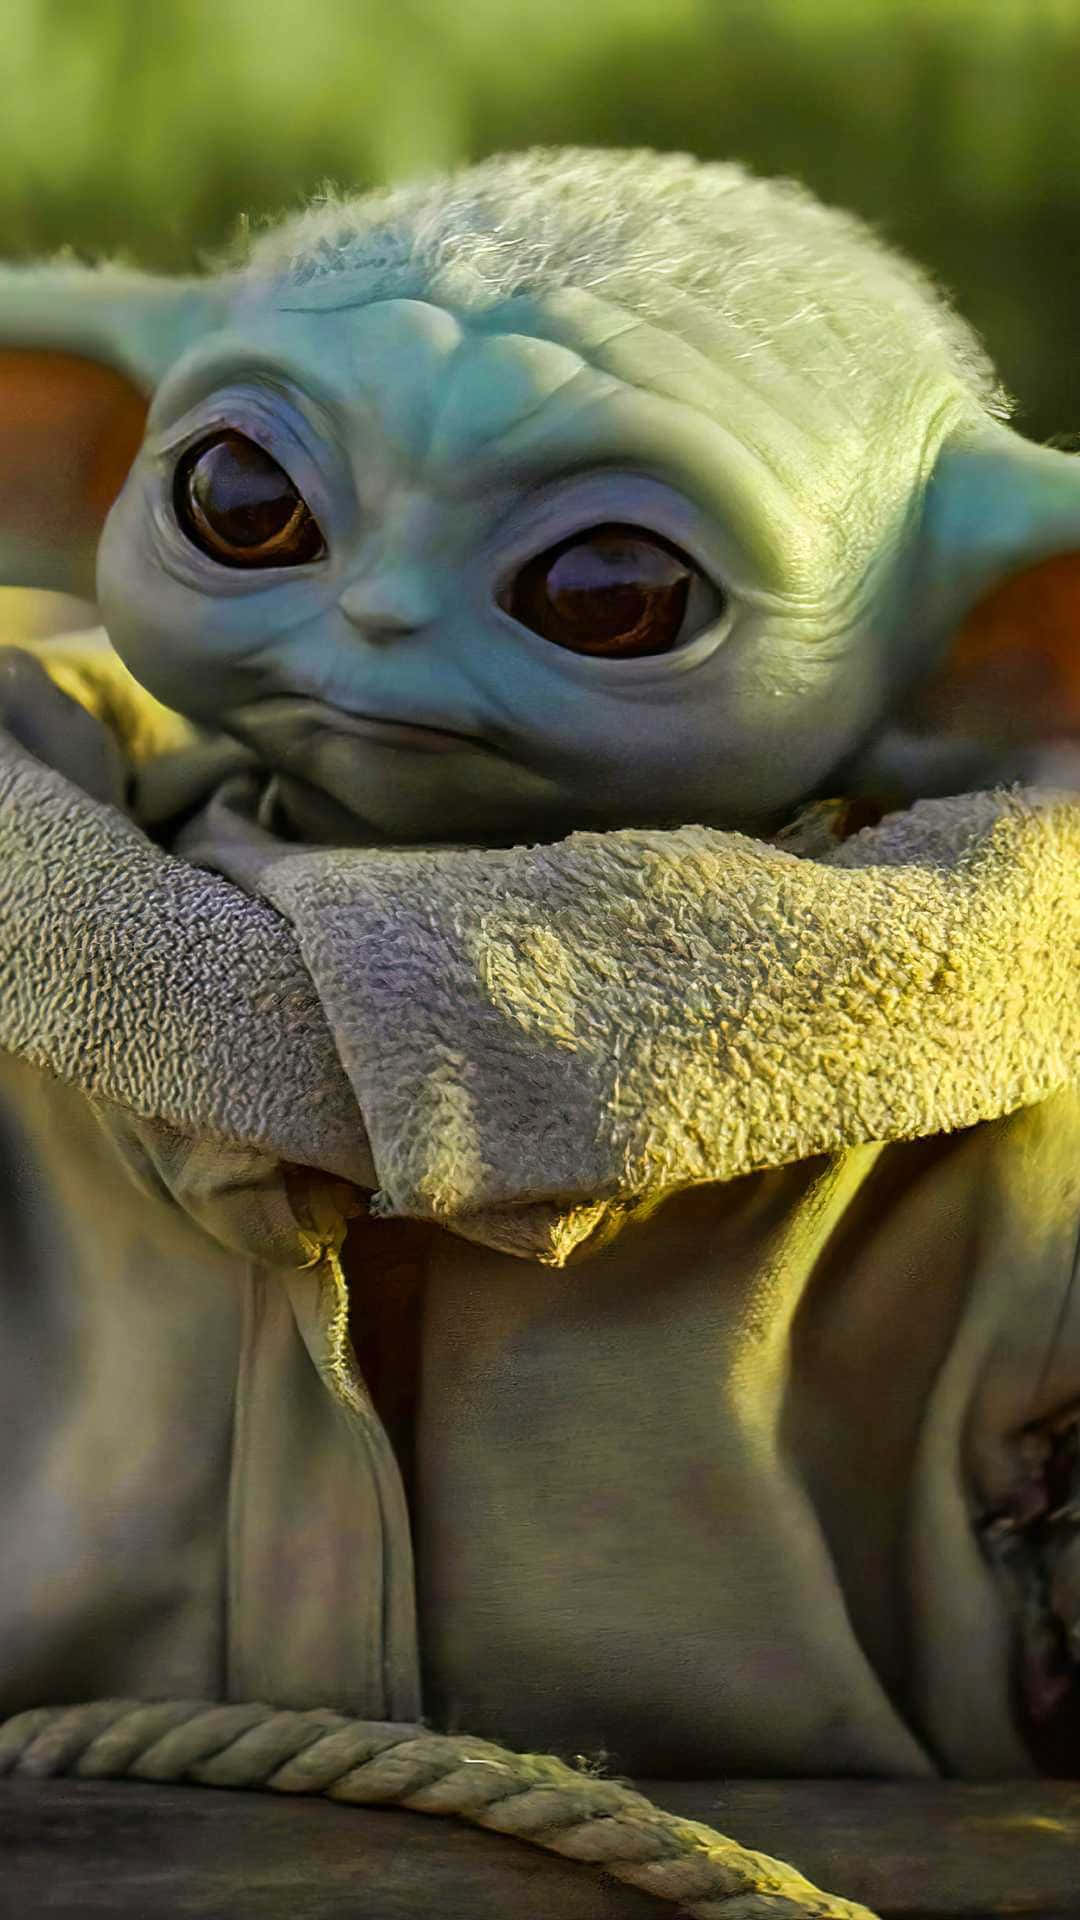  Baby Yoda Hintergrundbild 1080x1920. Download Baby Yoda Phone Wallpaper